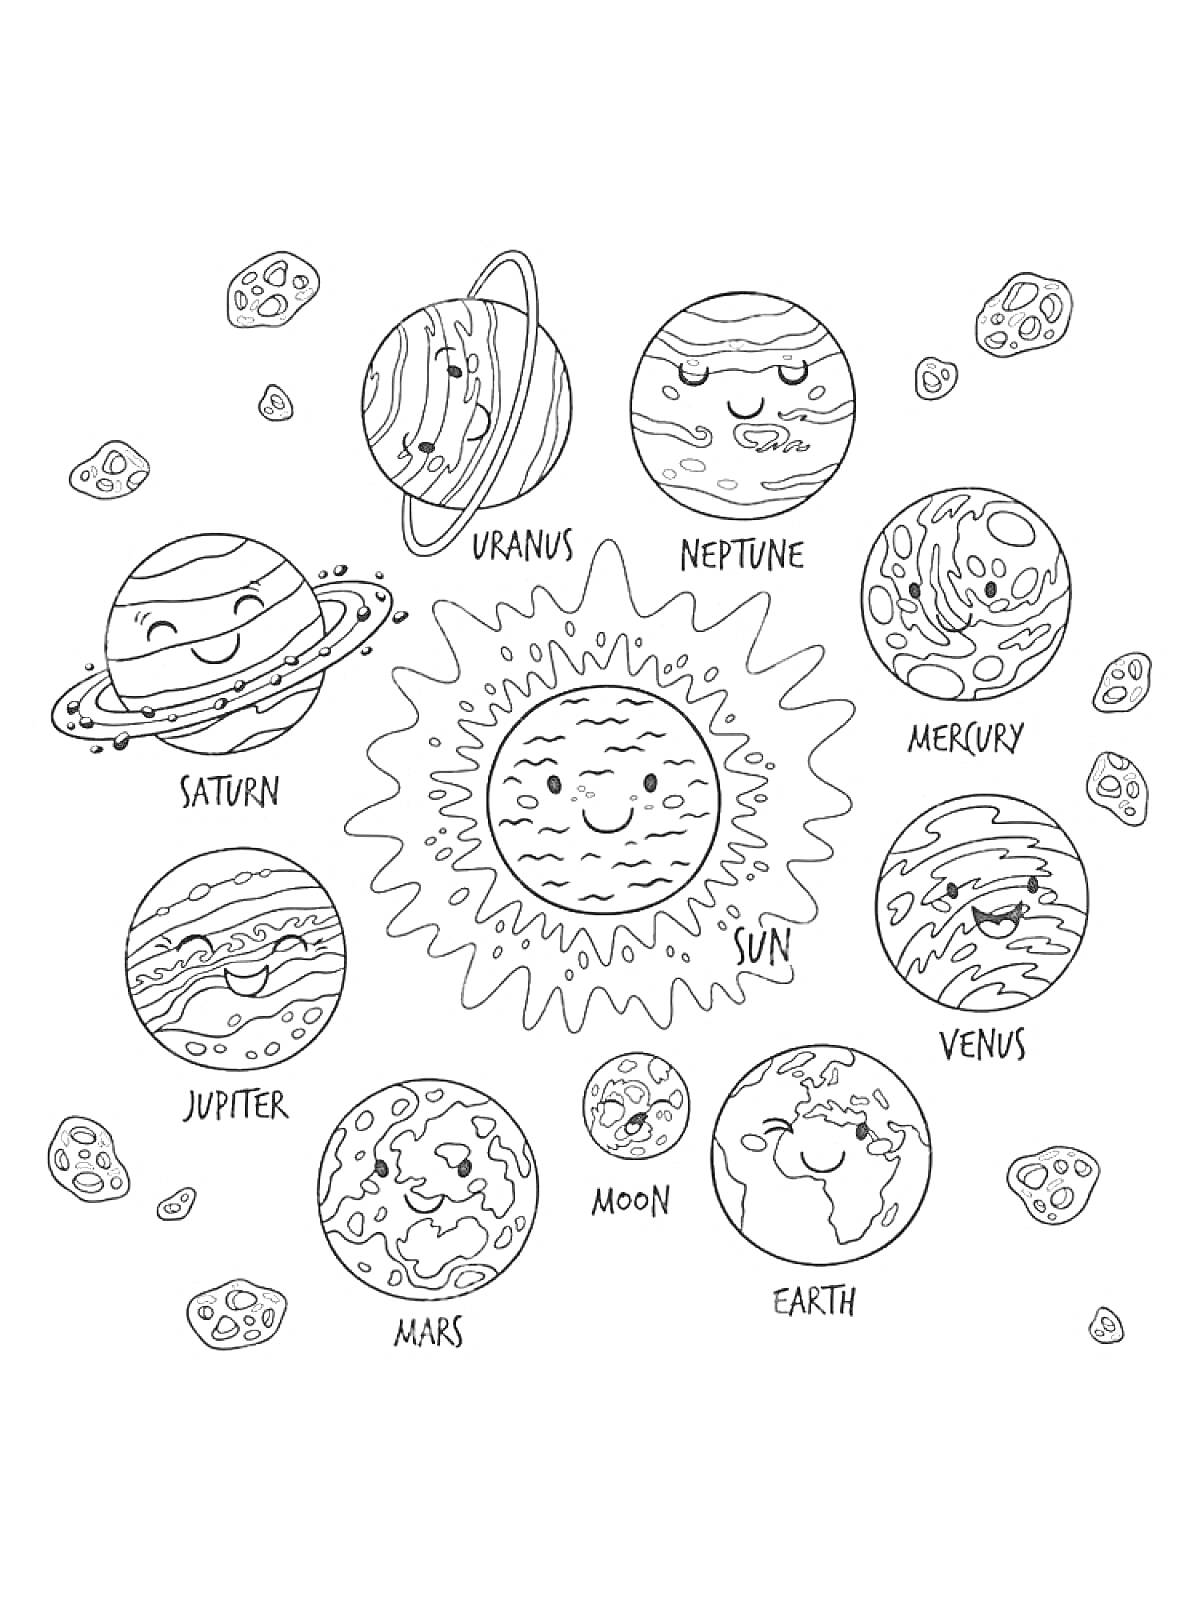 Раскраска Солнечная система с планетами (Солнце, Меркурий, Венера, Земля, Луна, Марс, Юпитер, Сатурн, Уран, Нептун) и астероидами